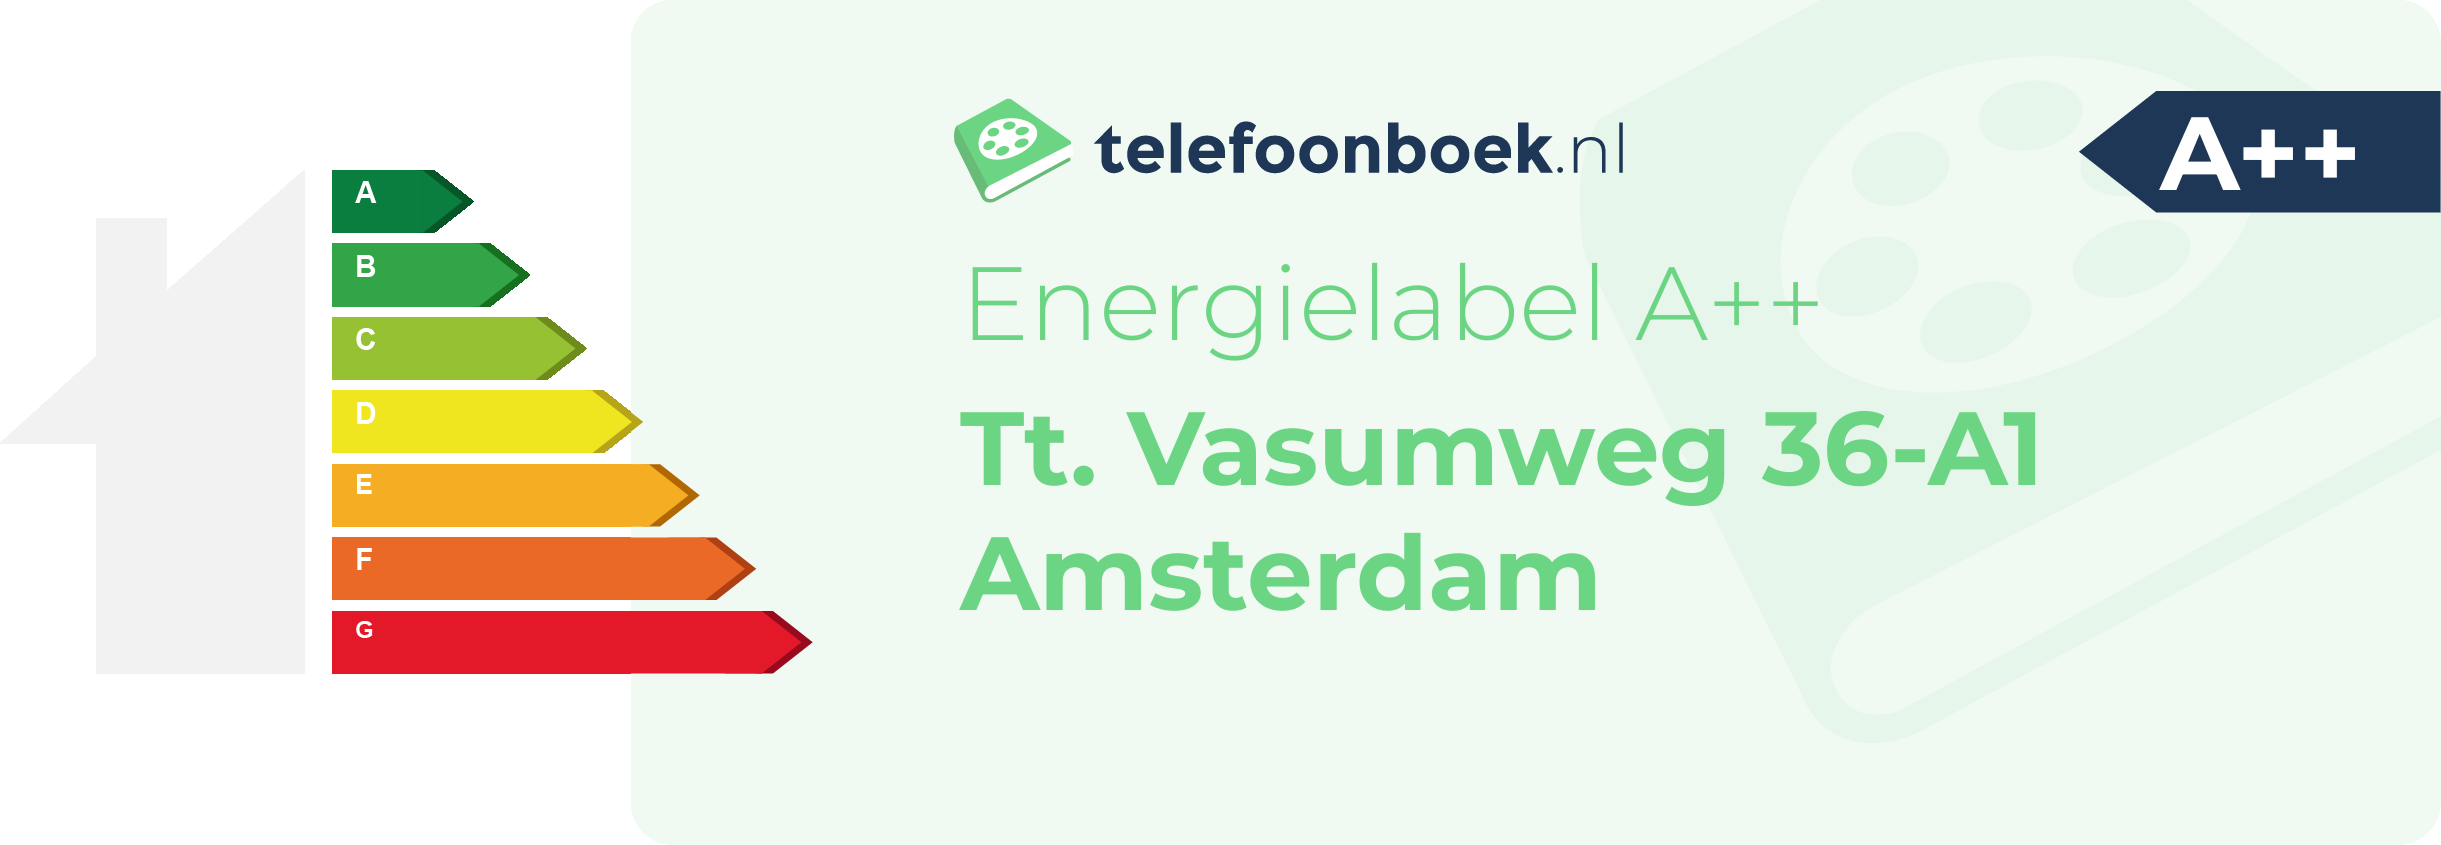 Energielabel Tt. Vasumweg 36-A1 Amsterdam